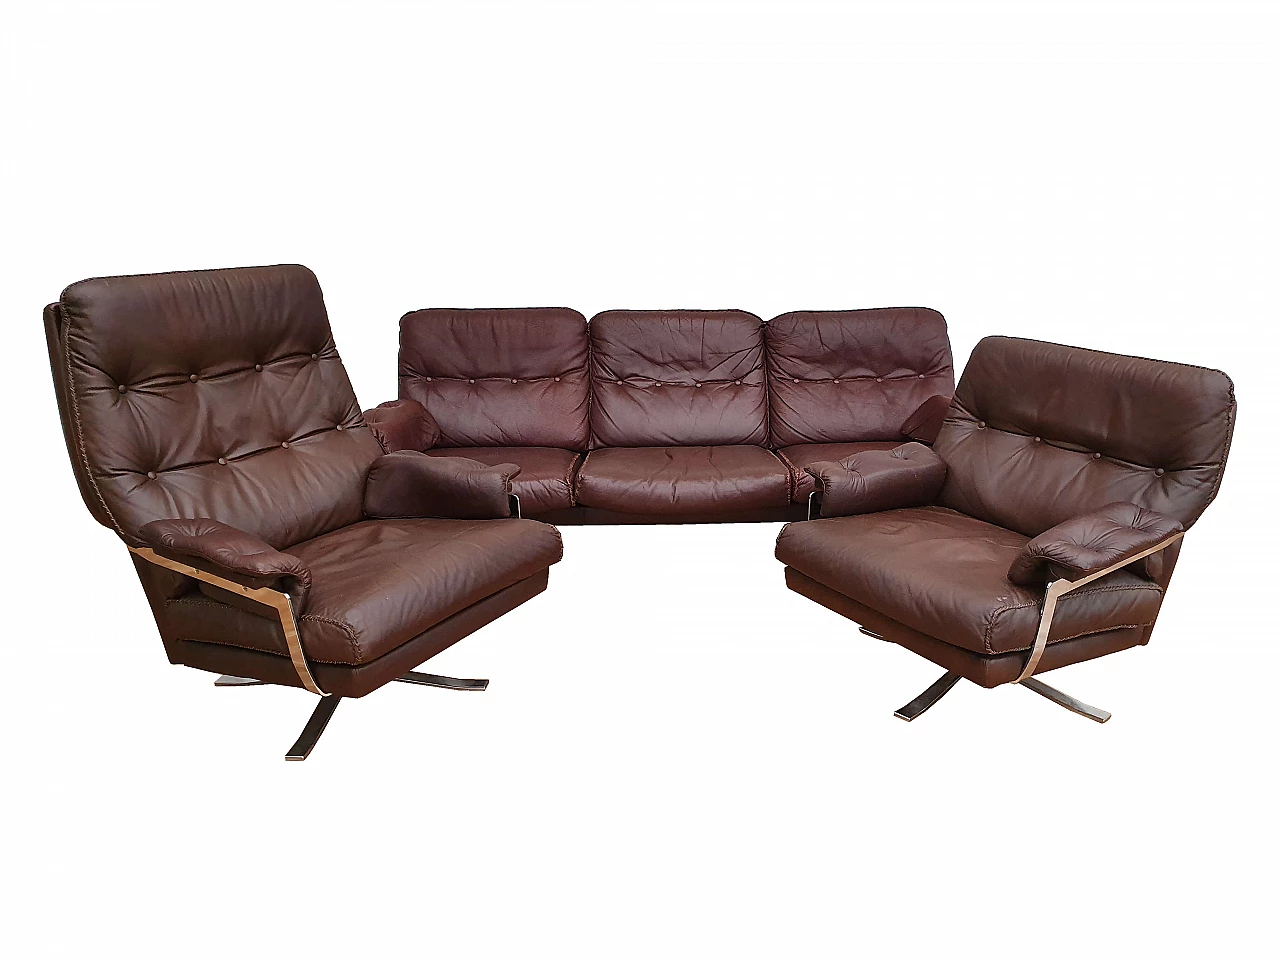 Swedish design 70s, Arne Norell sofa set, original upholstery, leather, chrome steel 1071531